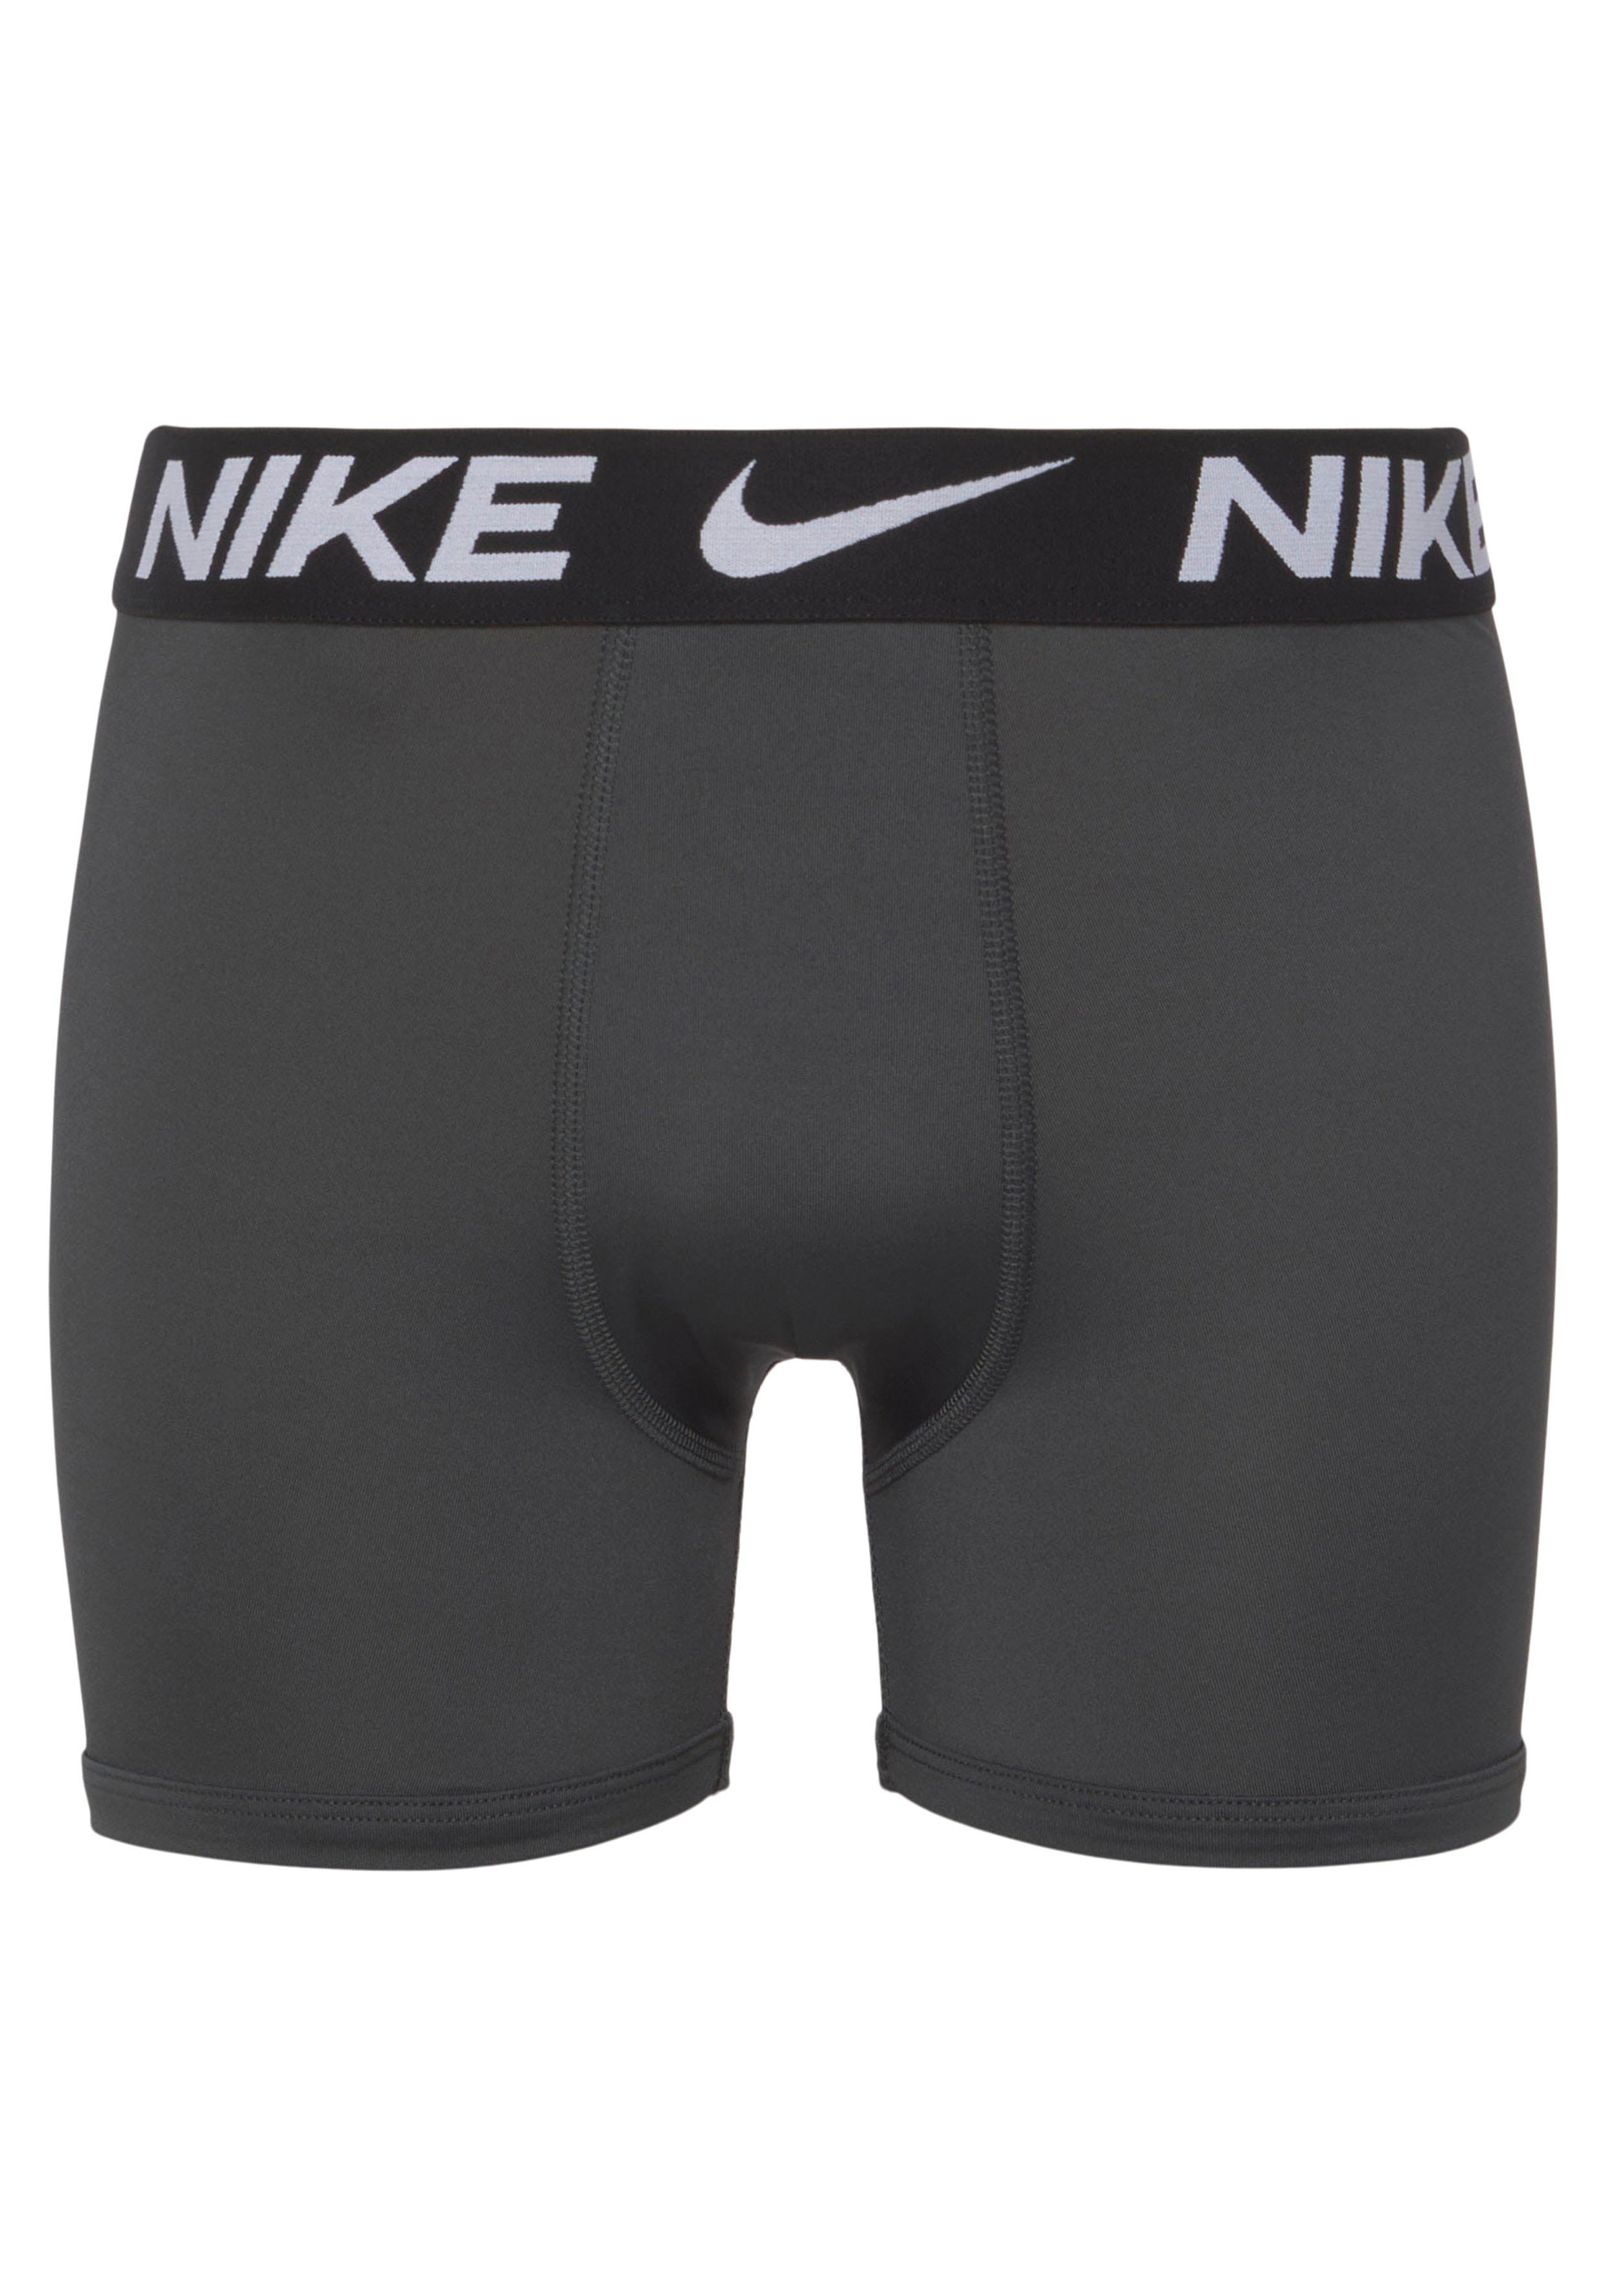 Kinder Sportswear Nike Boxershorts (Packung, university red für 3-St)